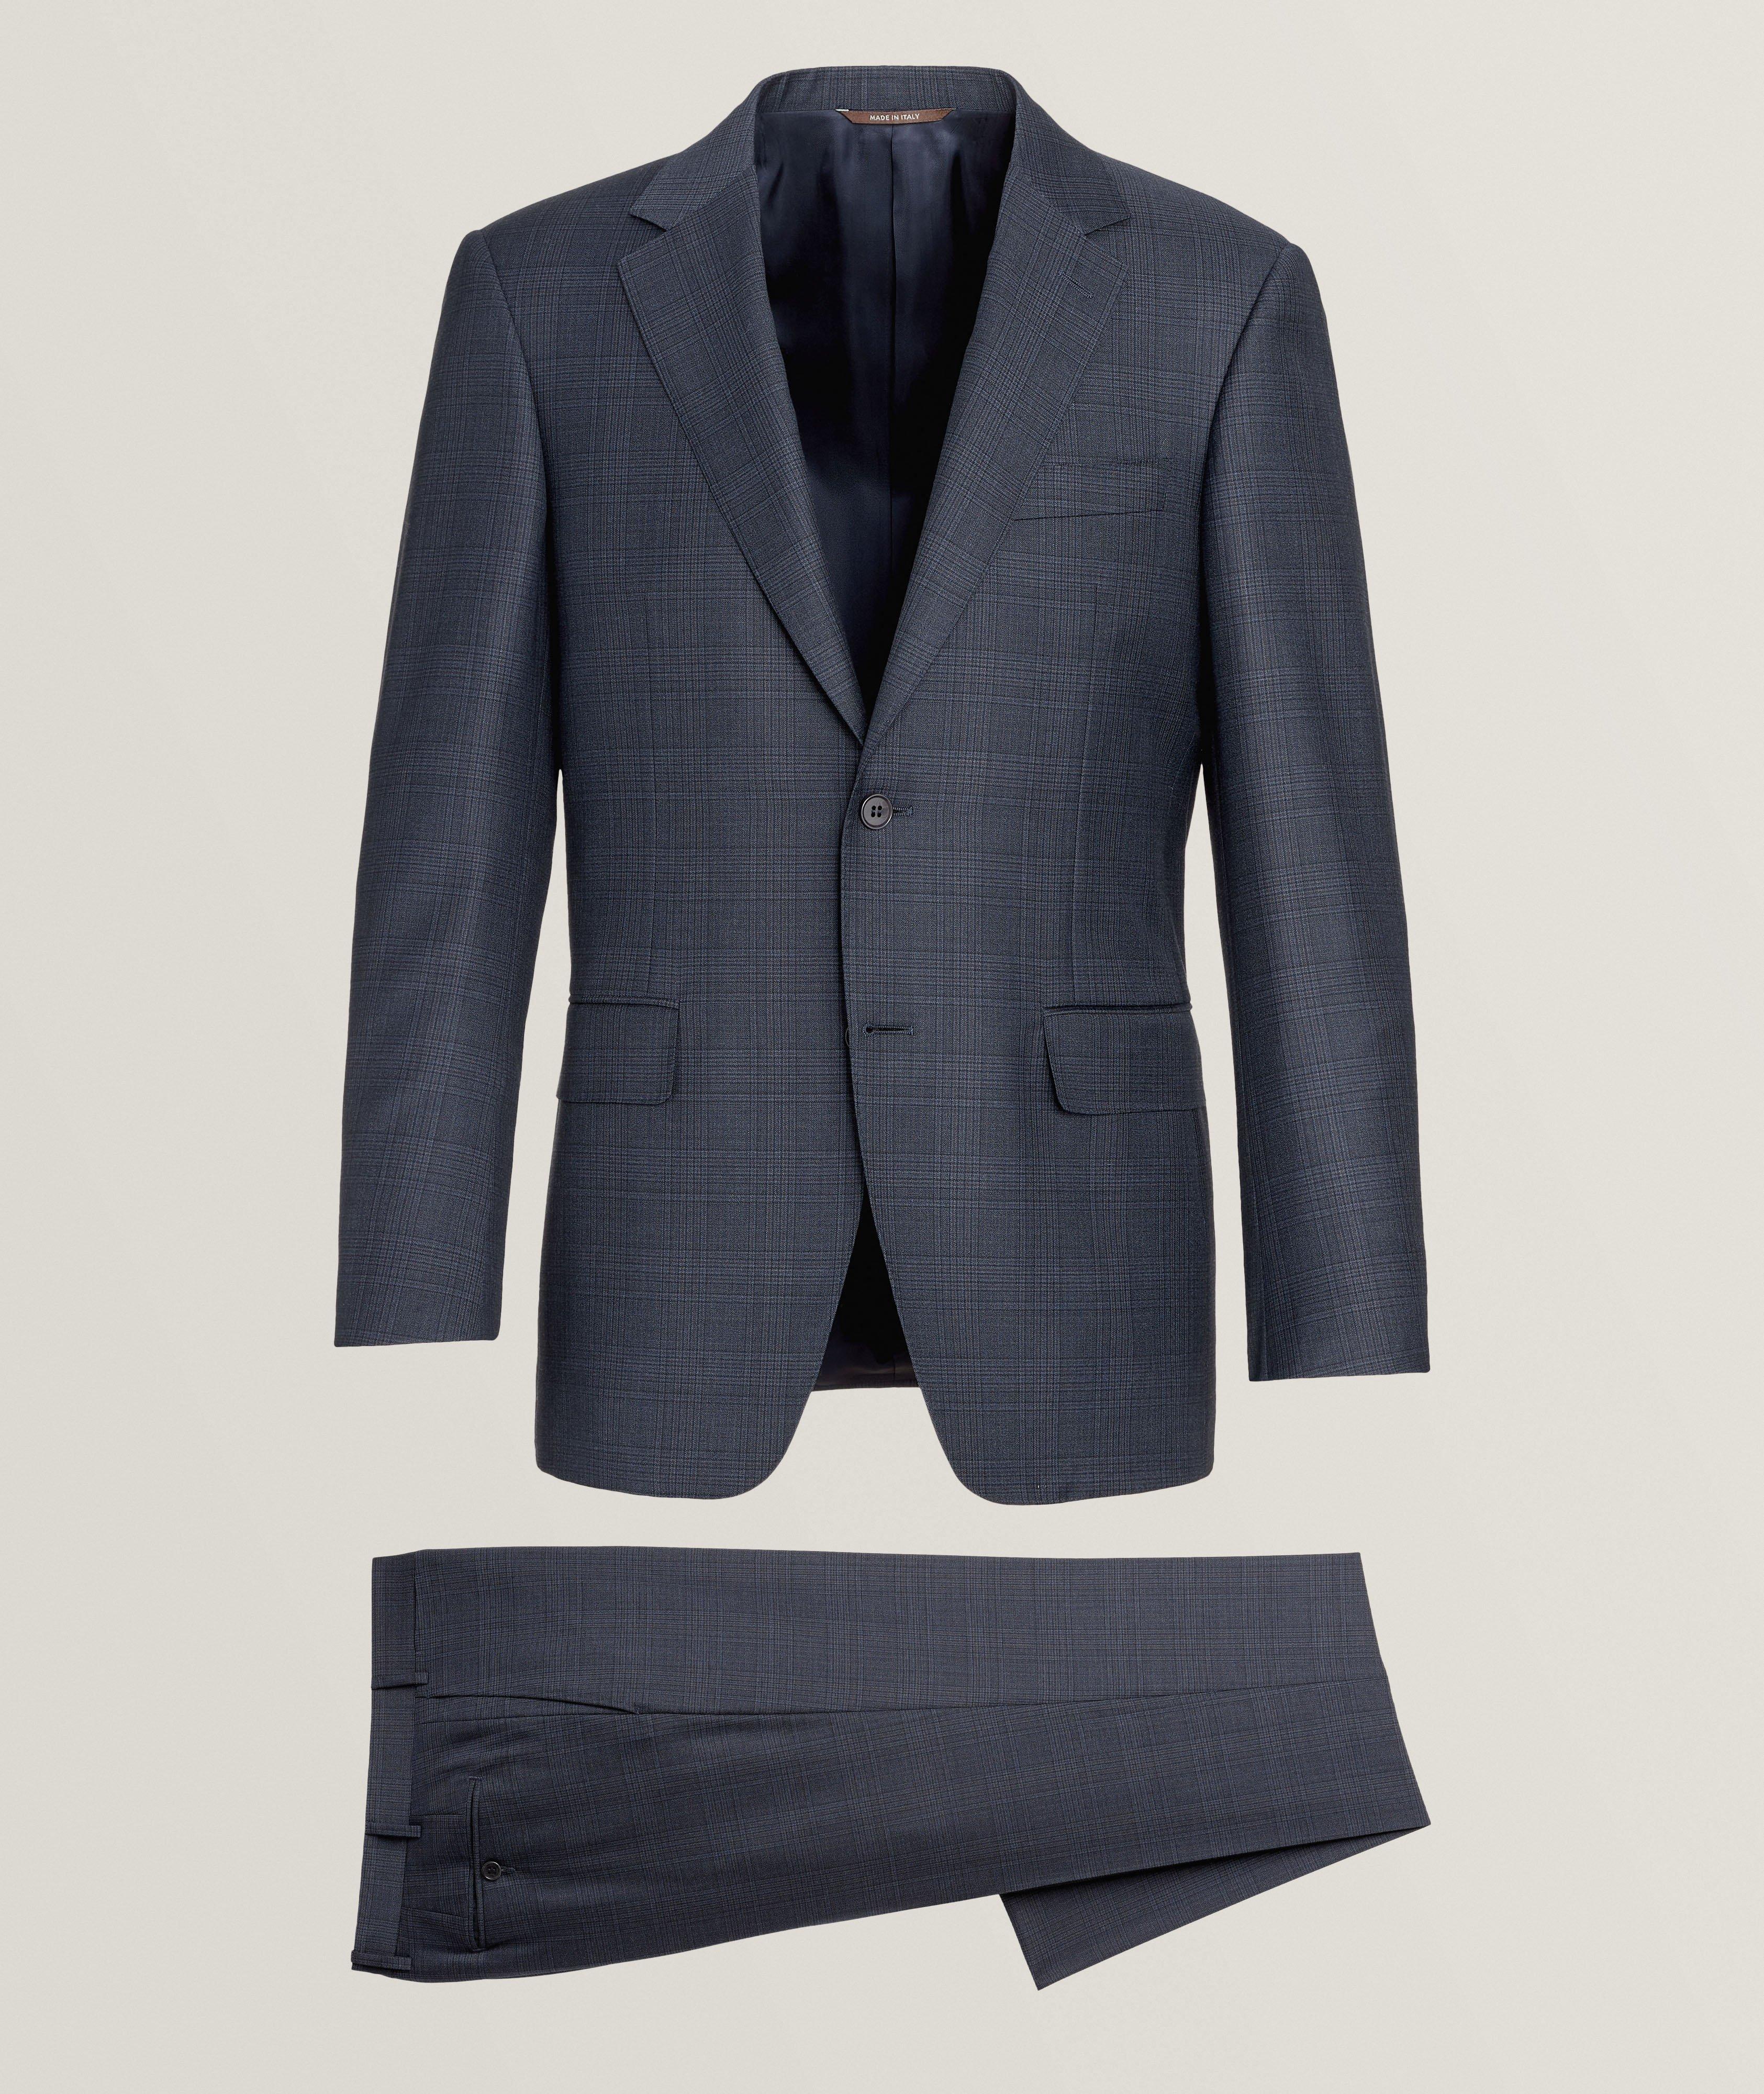 Tonal Glen Check Wool Suit  image 0